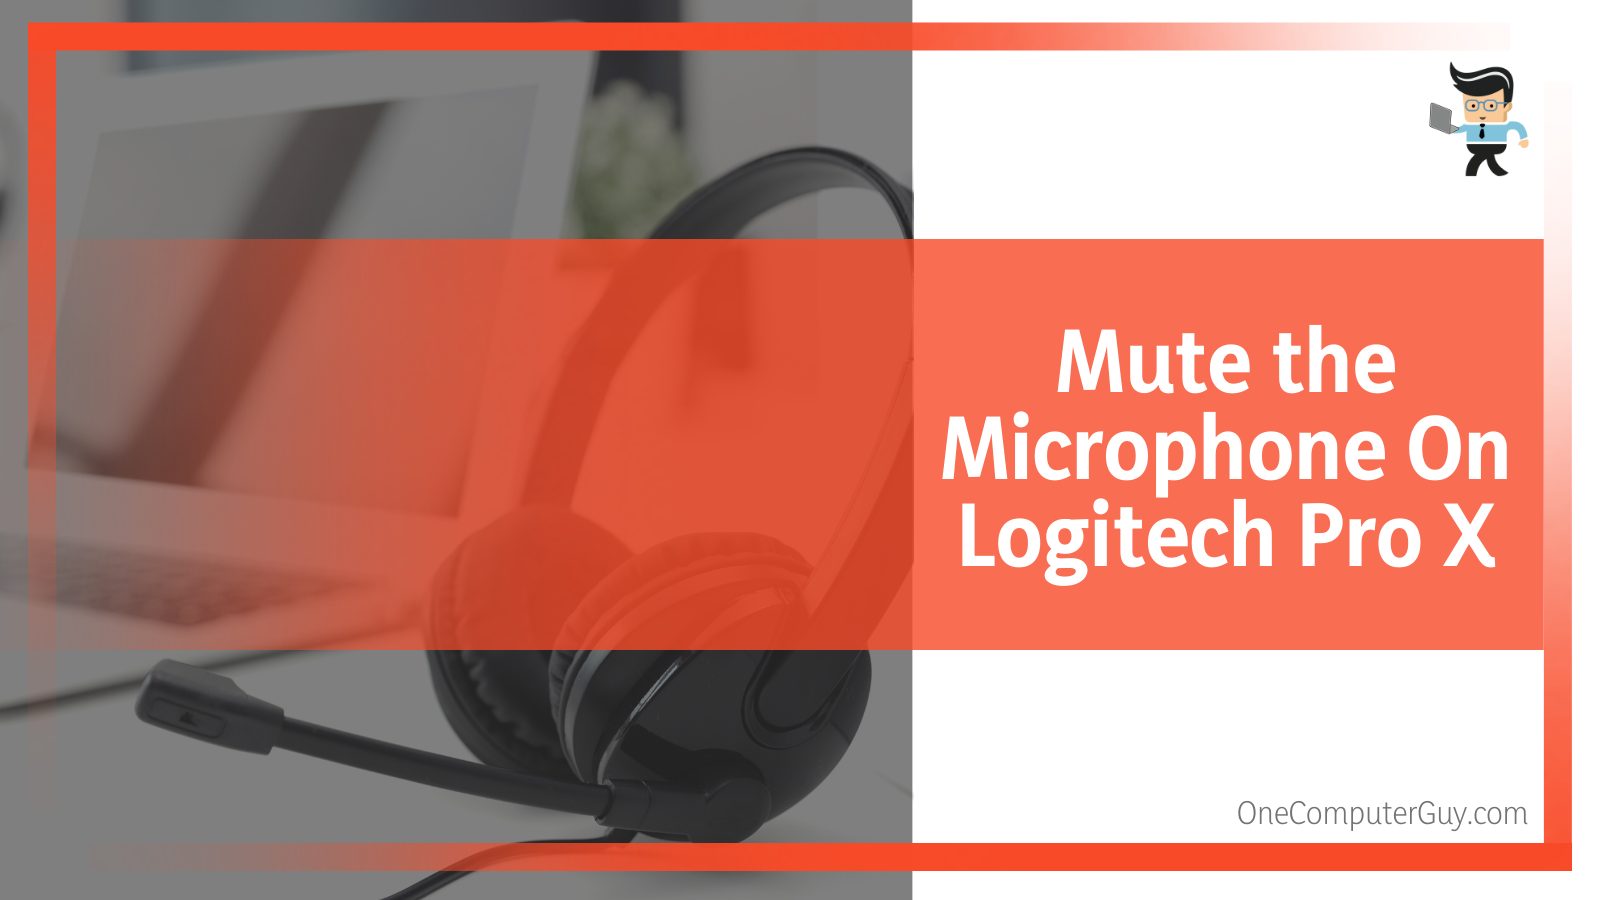 Mute the Microphone On Logitech Pro X